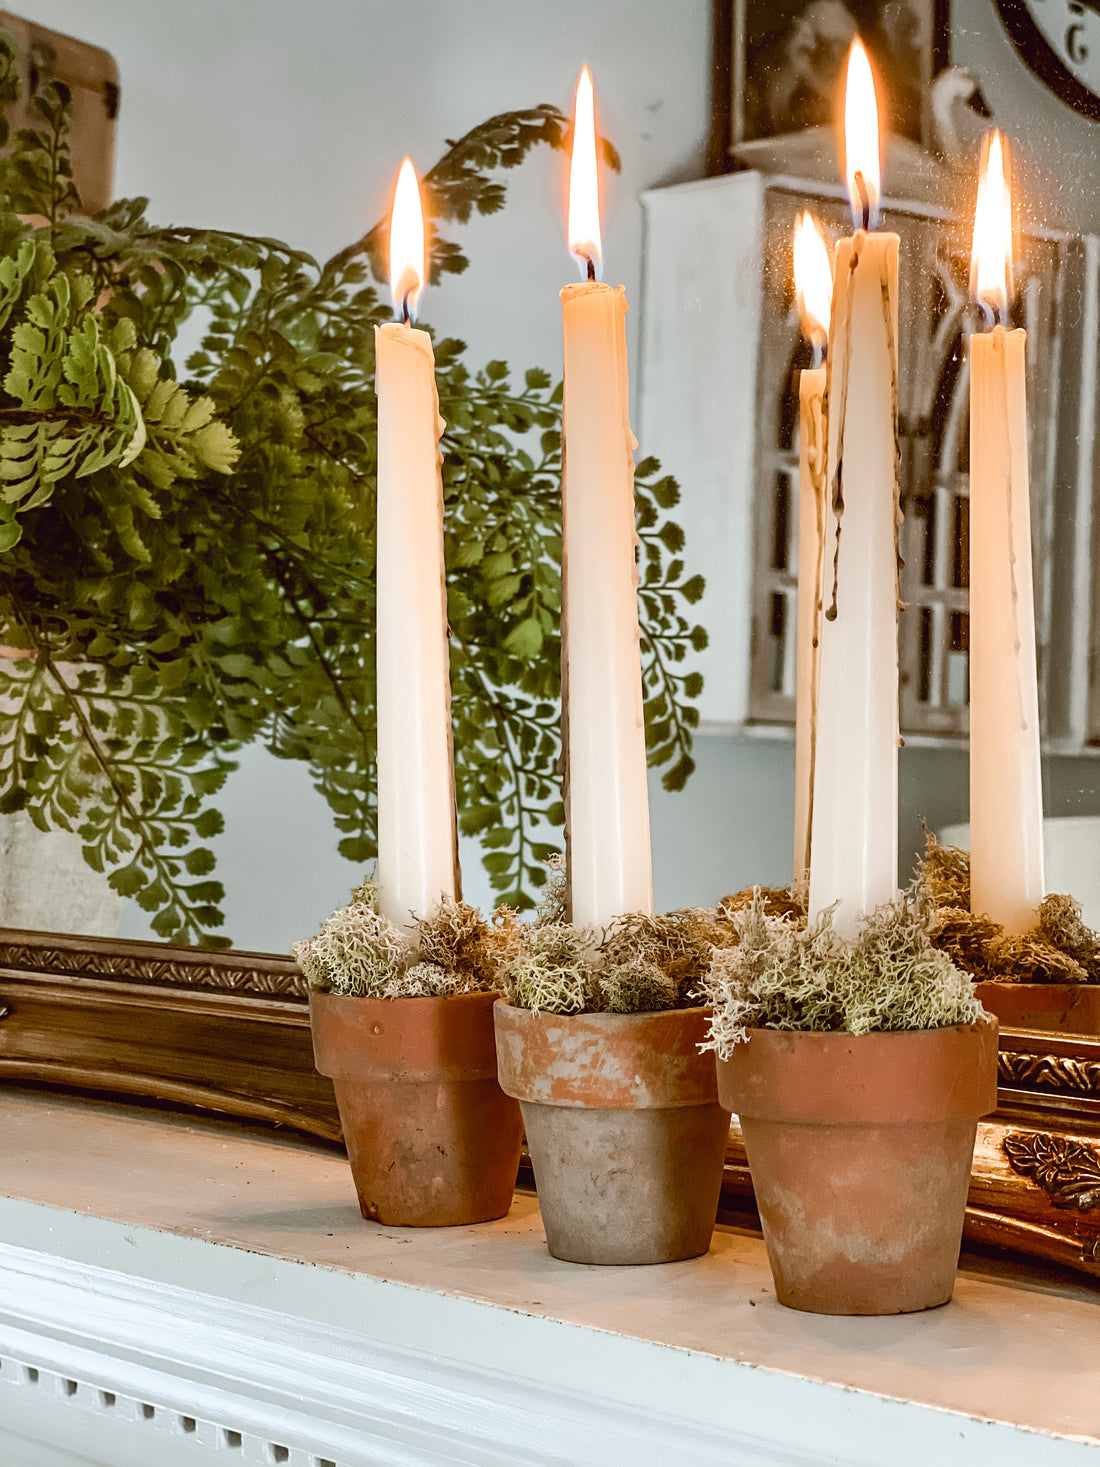 DIY Mossy Terracotta Pot Candles